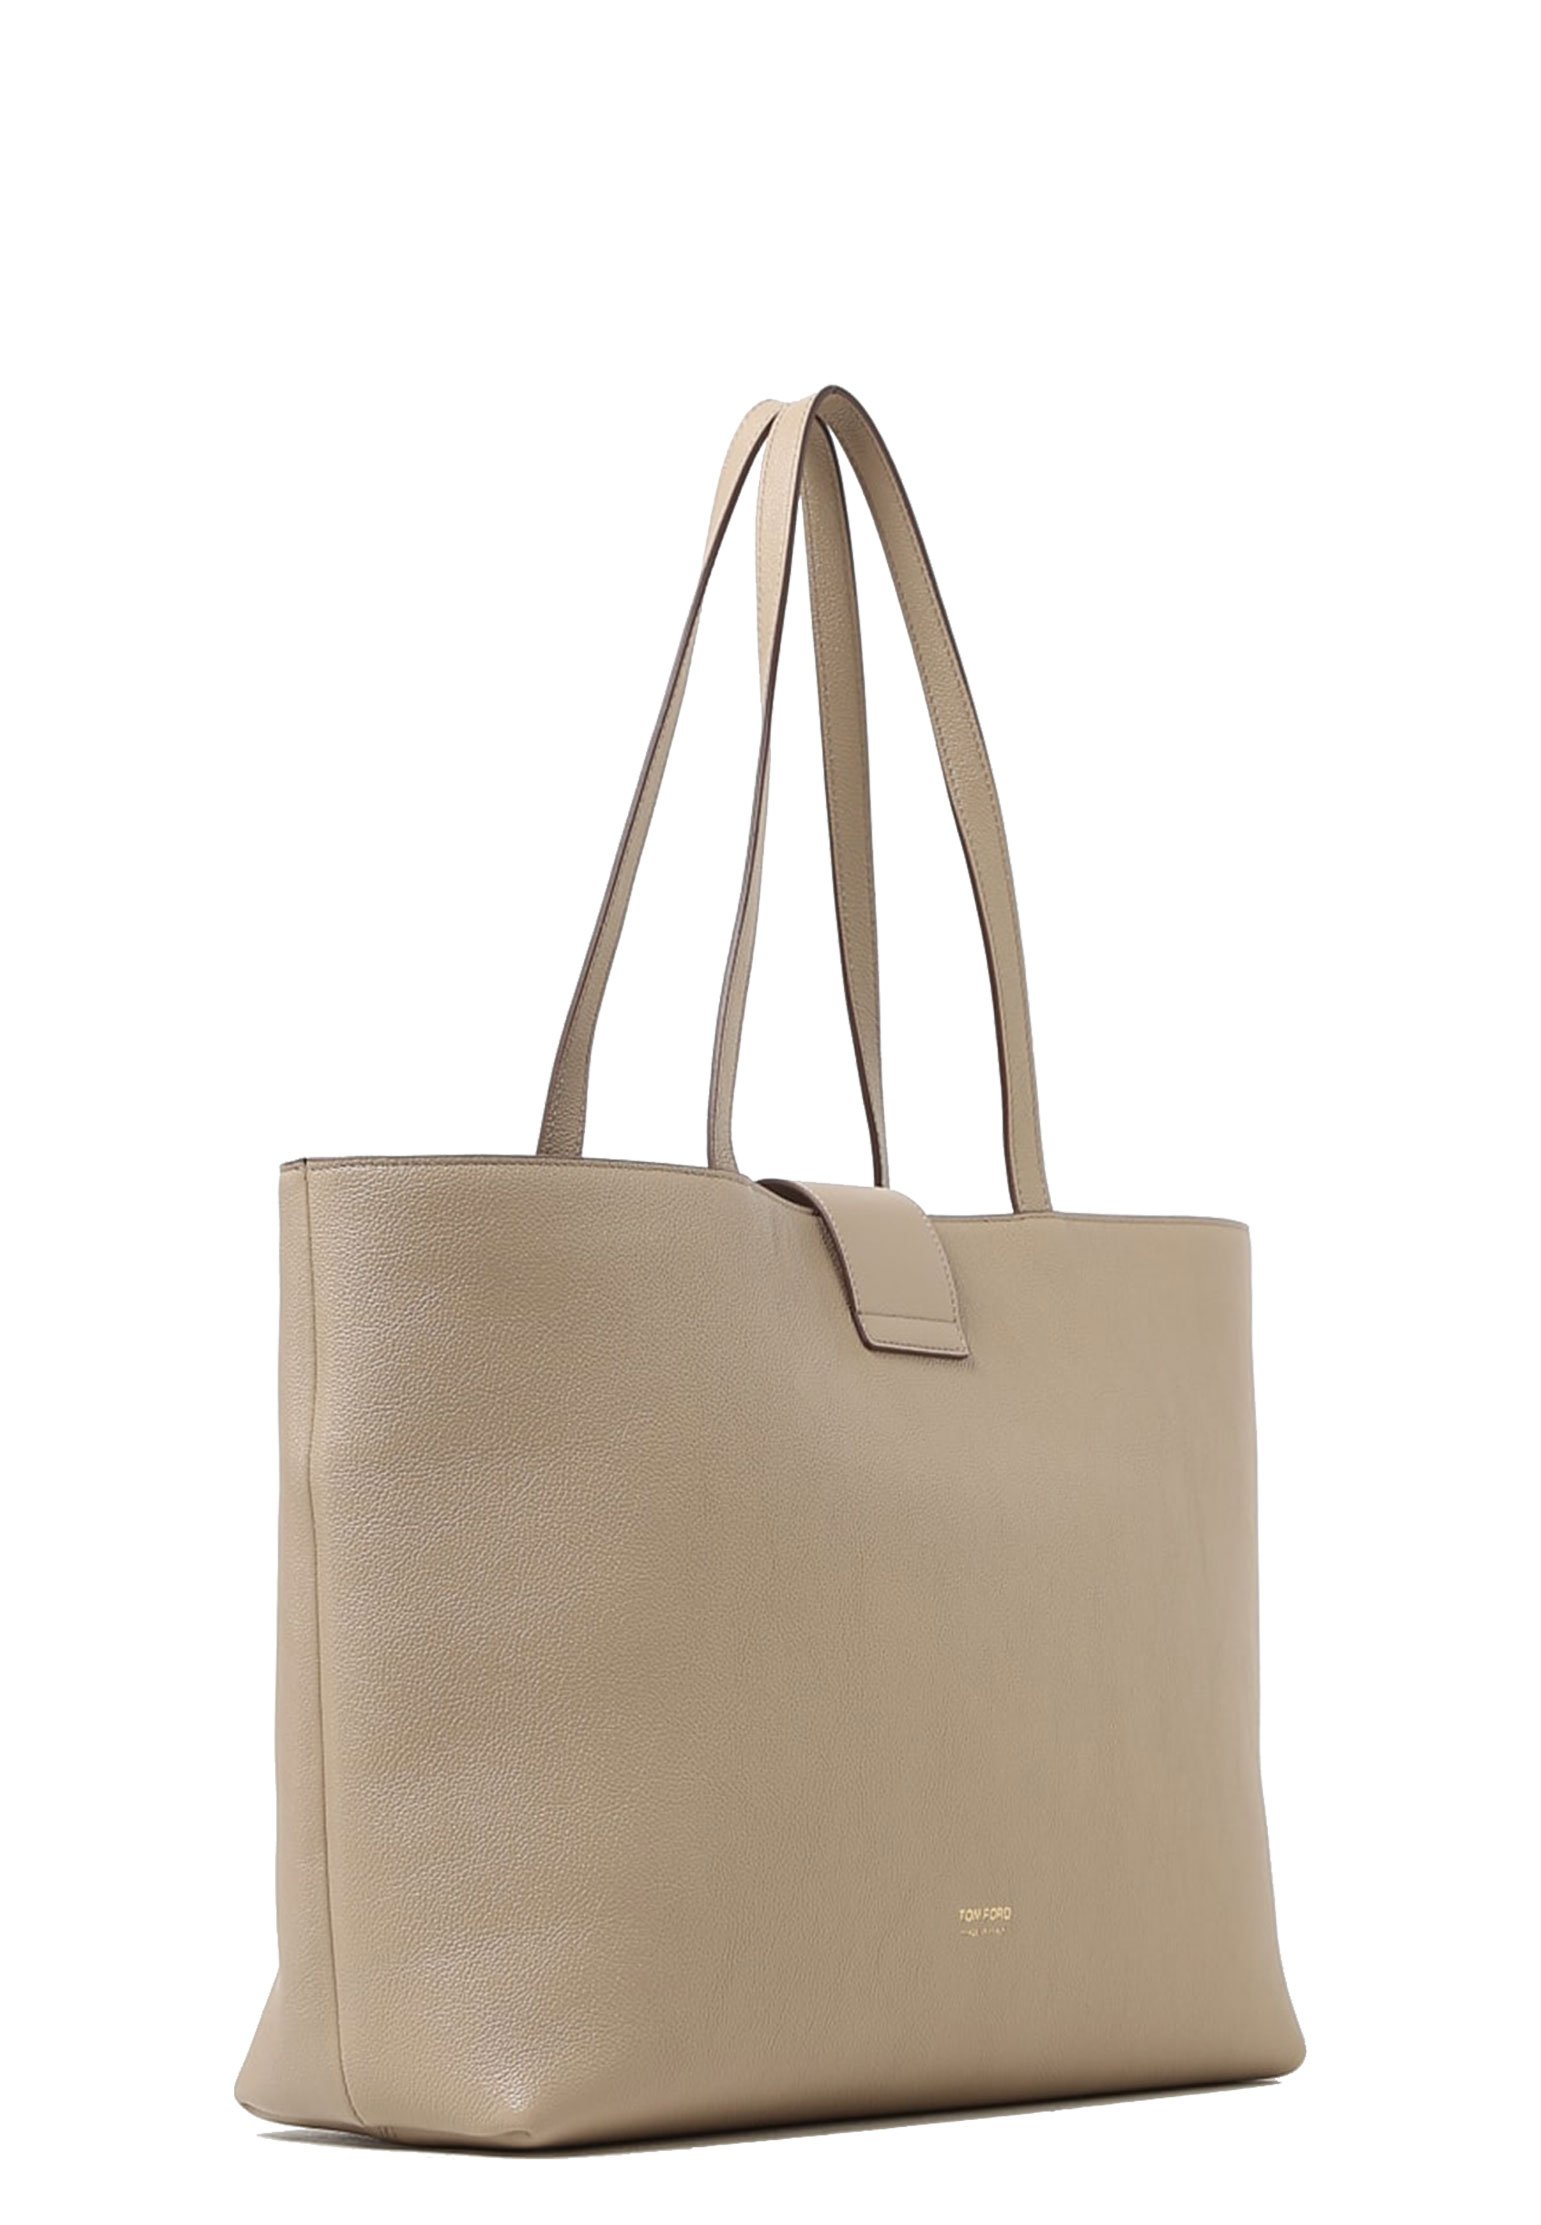 Bag TOM FORD Color: beige (Code: 2975) in online store Allure